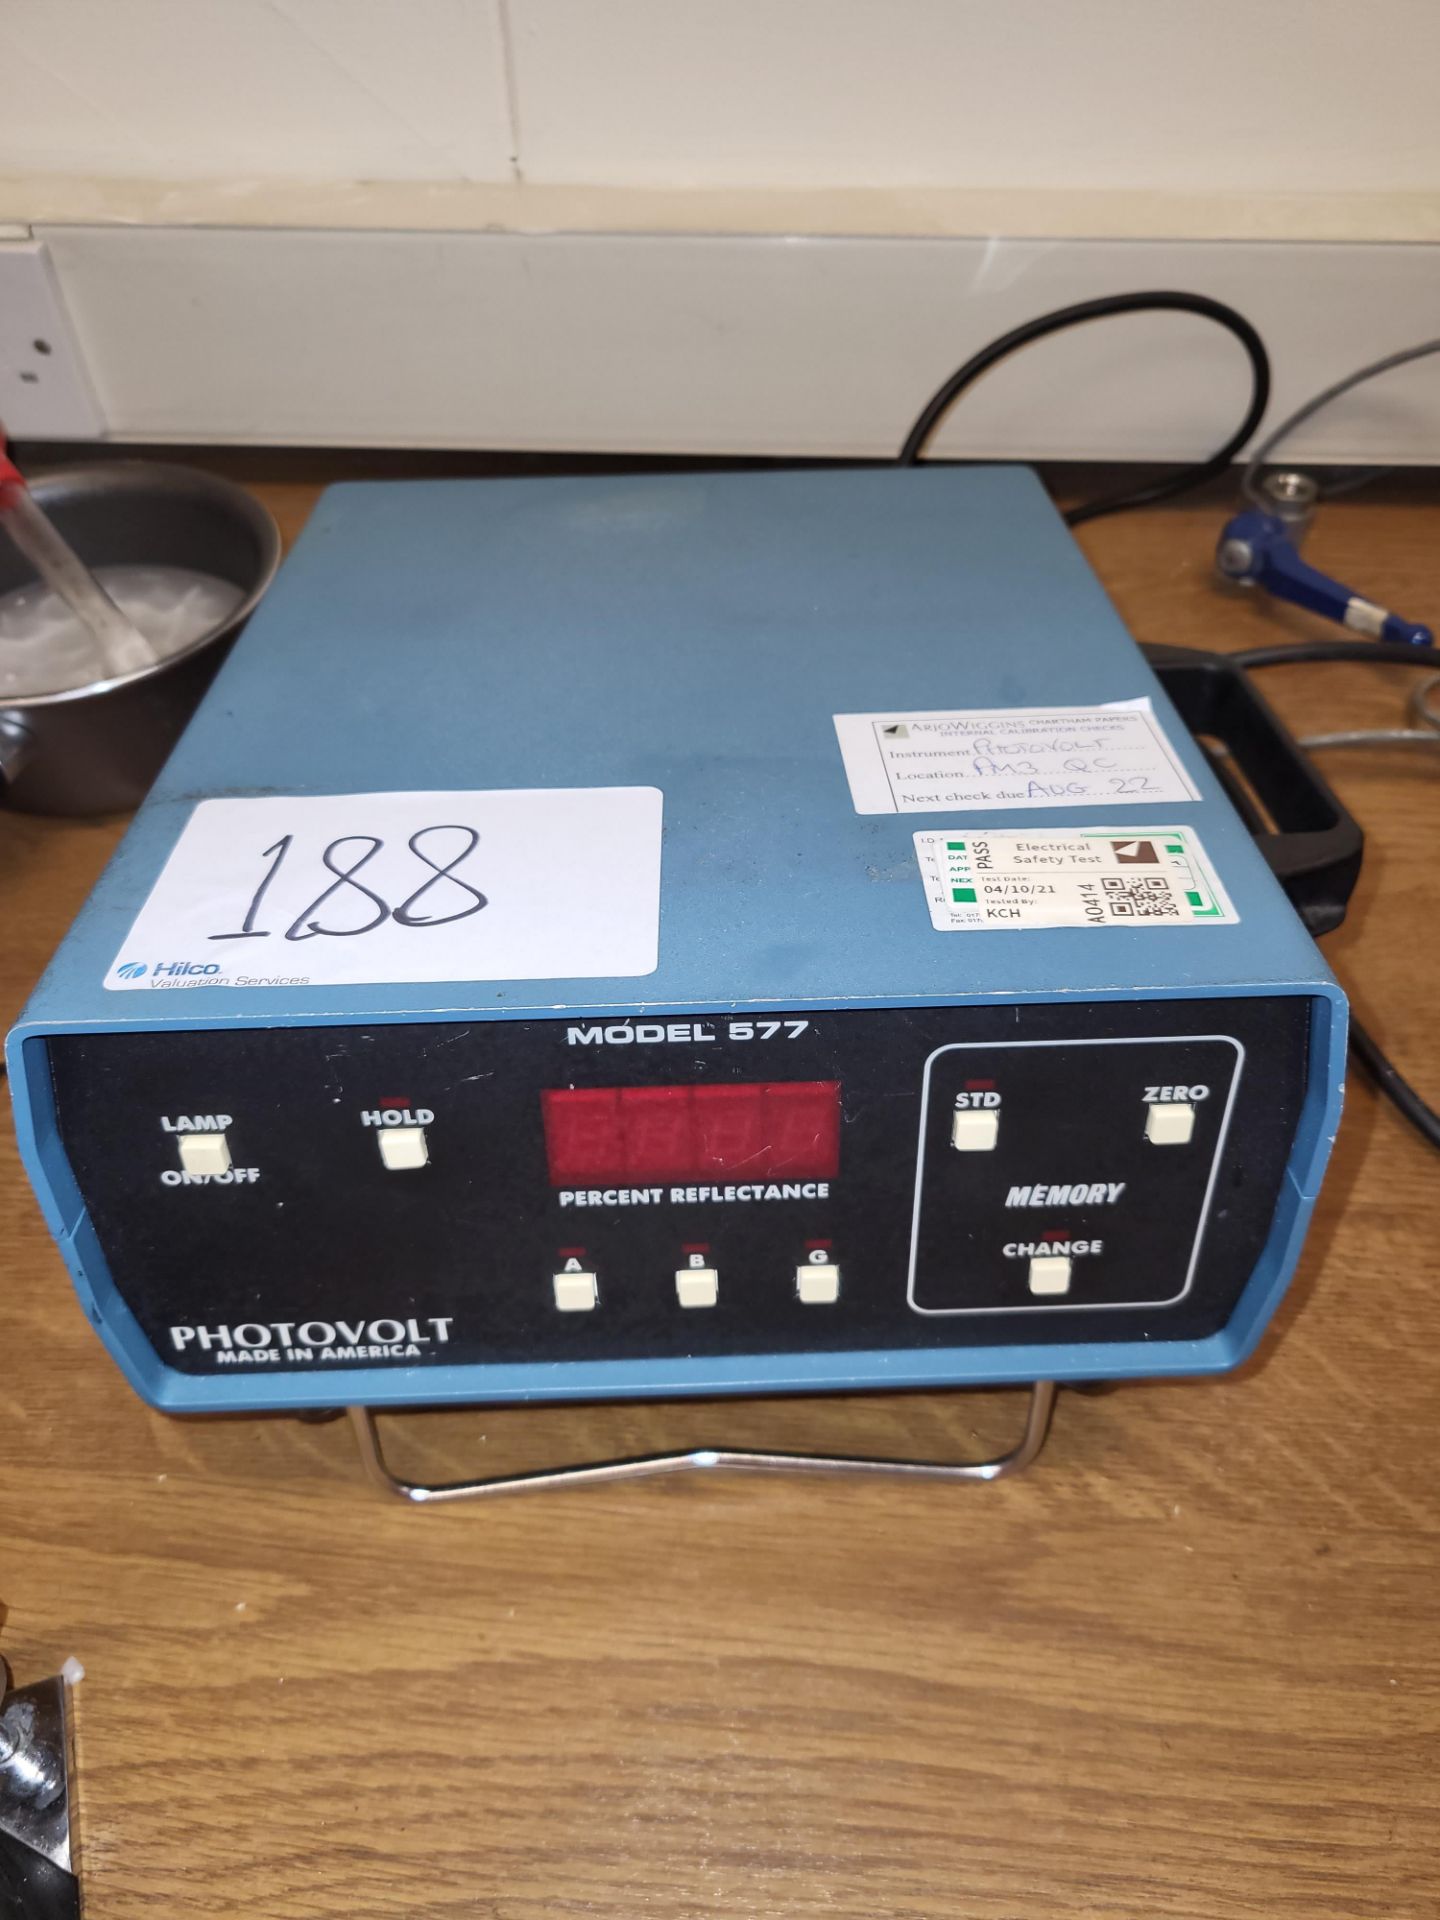 1 Photovolt Model 577 Opacity Tester. Serial No. 3206